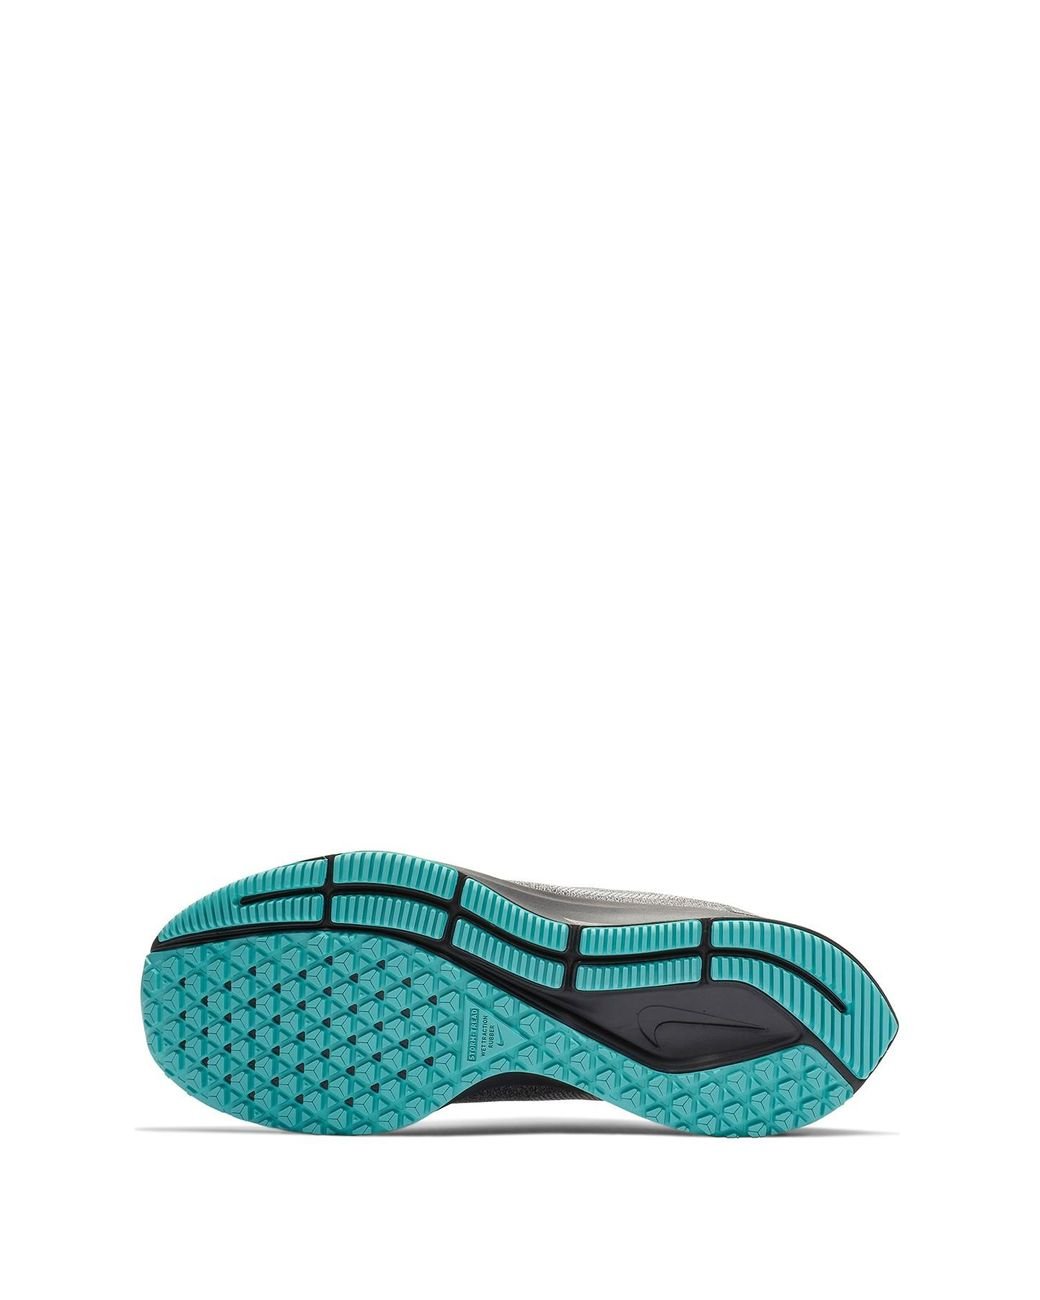 Organizar Disparates cartucho Nike Air Zoom Pegasus 35 Shield Gs Water Repellent Running Shoe in White |  Lyst